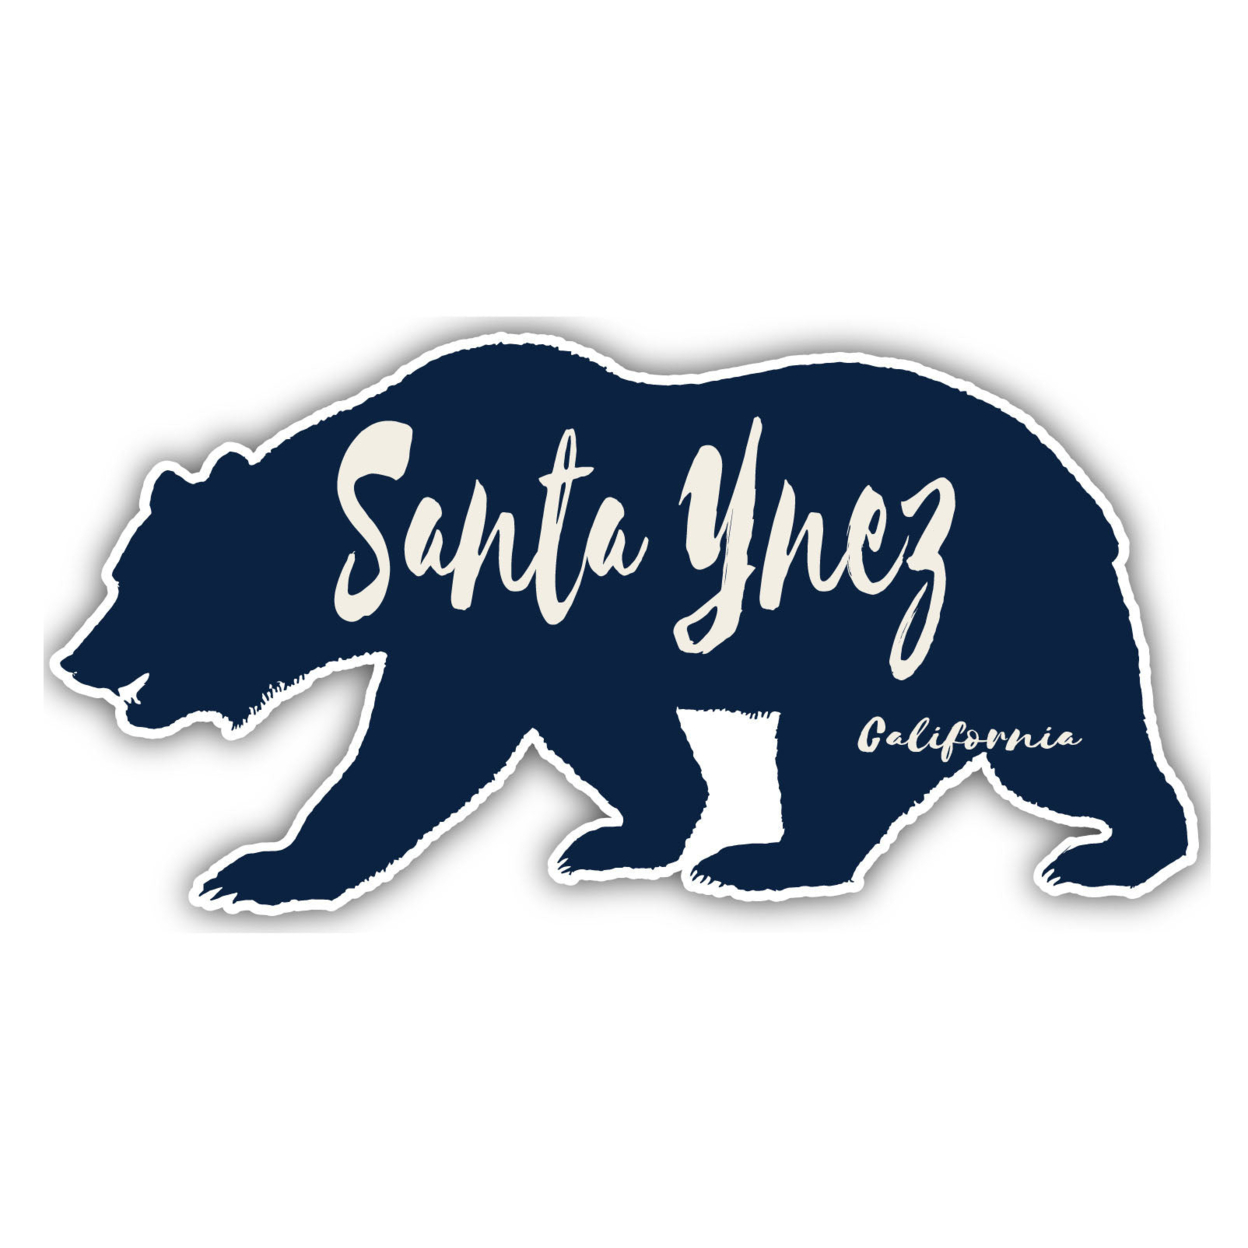 Santa Ynez California Souvenir Decorative Stickers (Choose Theme And Size) - Single Unit, 2-Inch, Bear